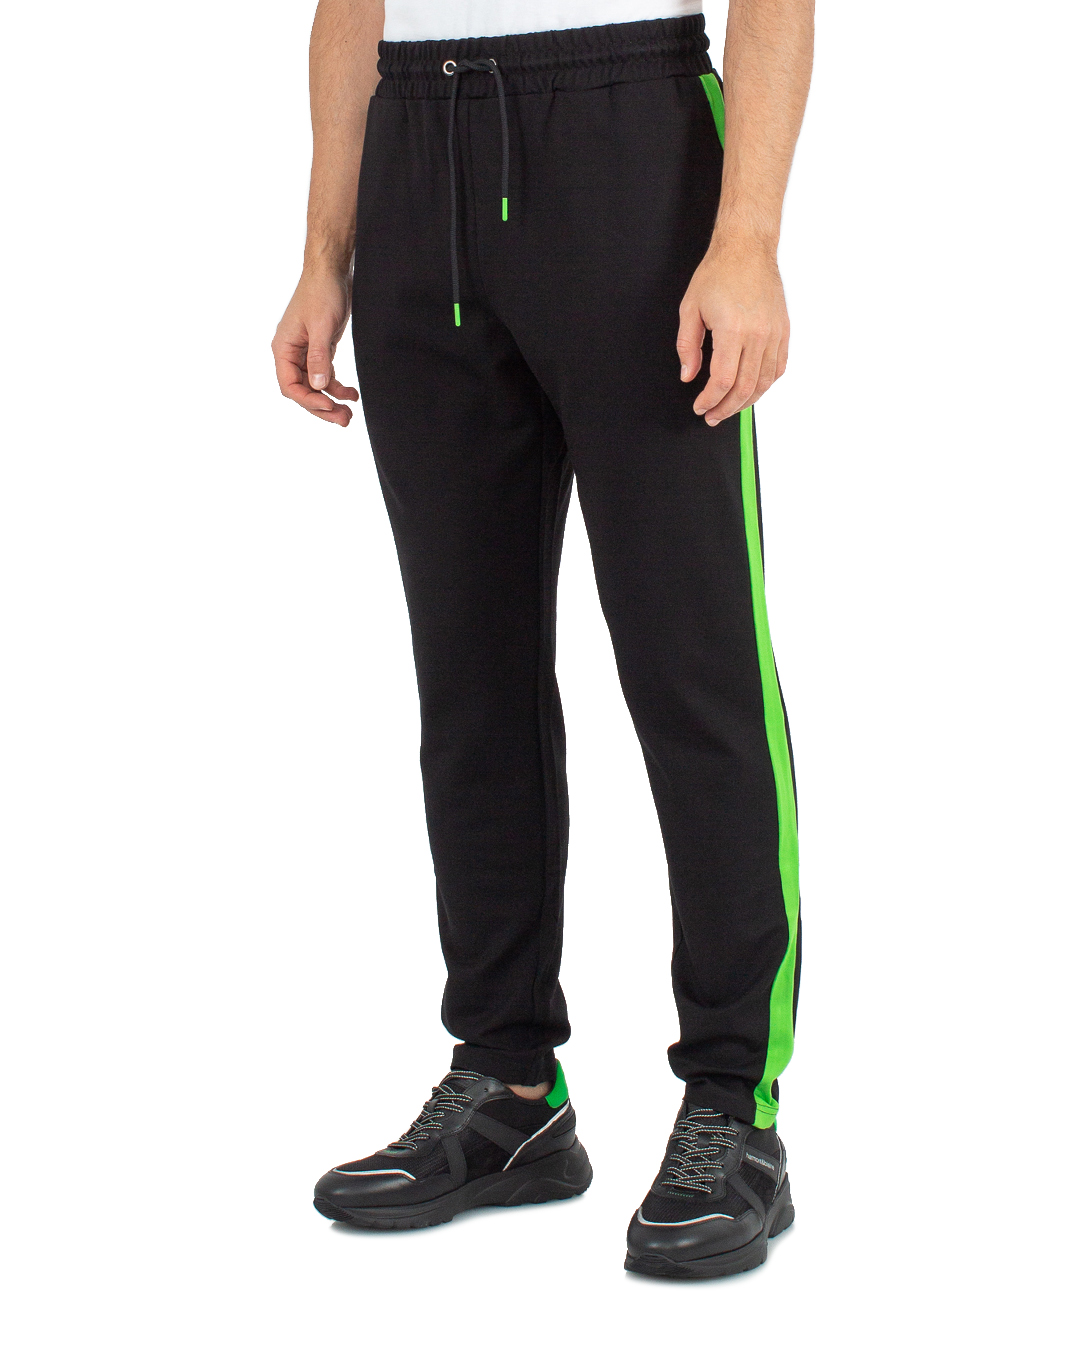 брюки Harmont & Blaine FRK155 черный+зеленый xl, размер xl, цвет черный+зеленый FRK155 черный+зеленый xl - фото 3